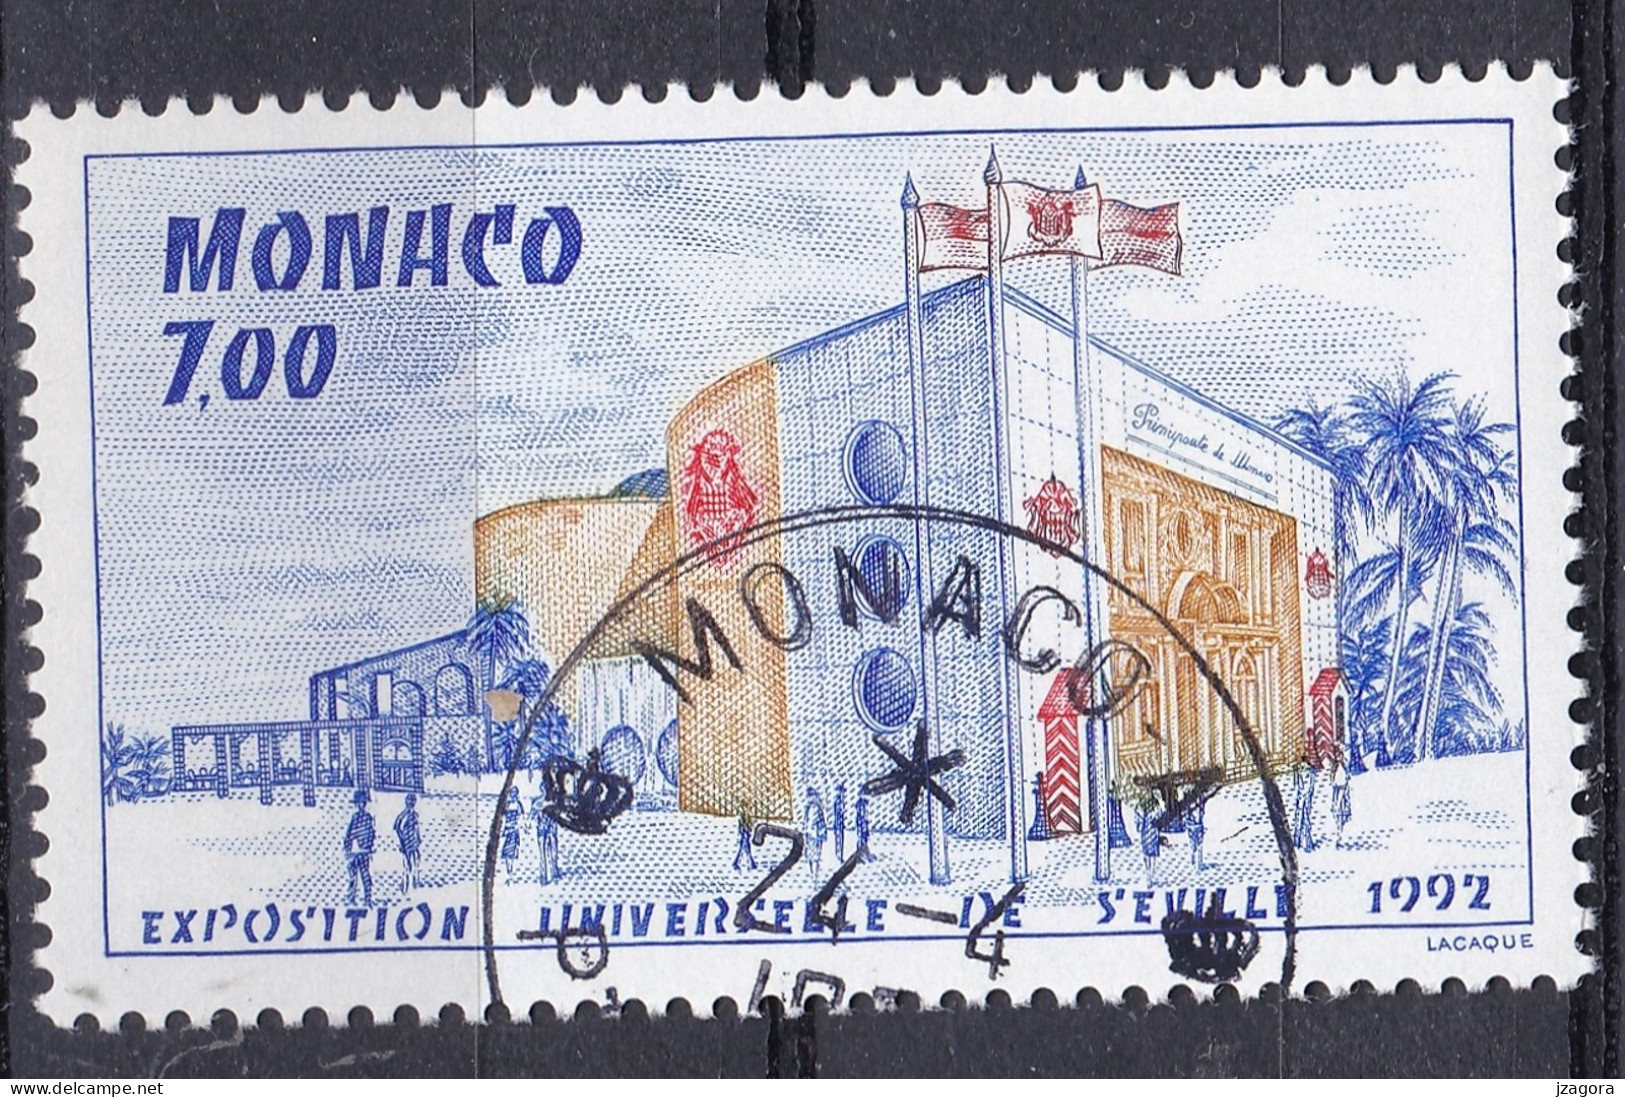 EXPO 1992  EXHIBITION SEVILLA SPAIN - MONACO 2000 MI 2502 USED NH WITH GUM - 1992 – Sevilla (España)